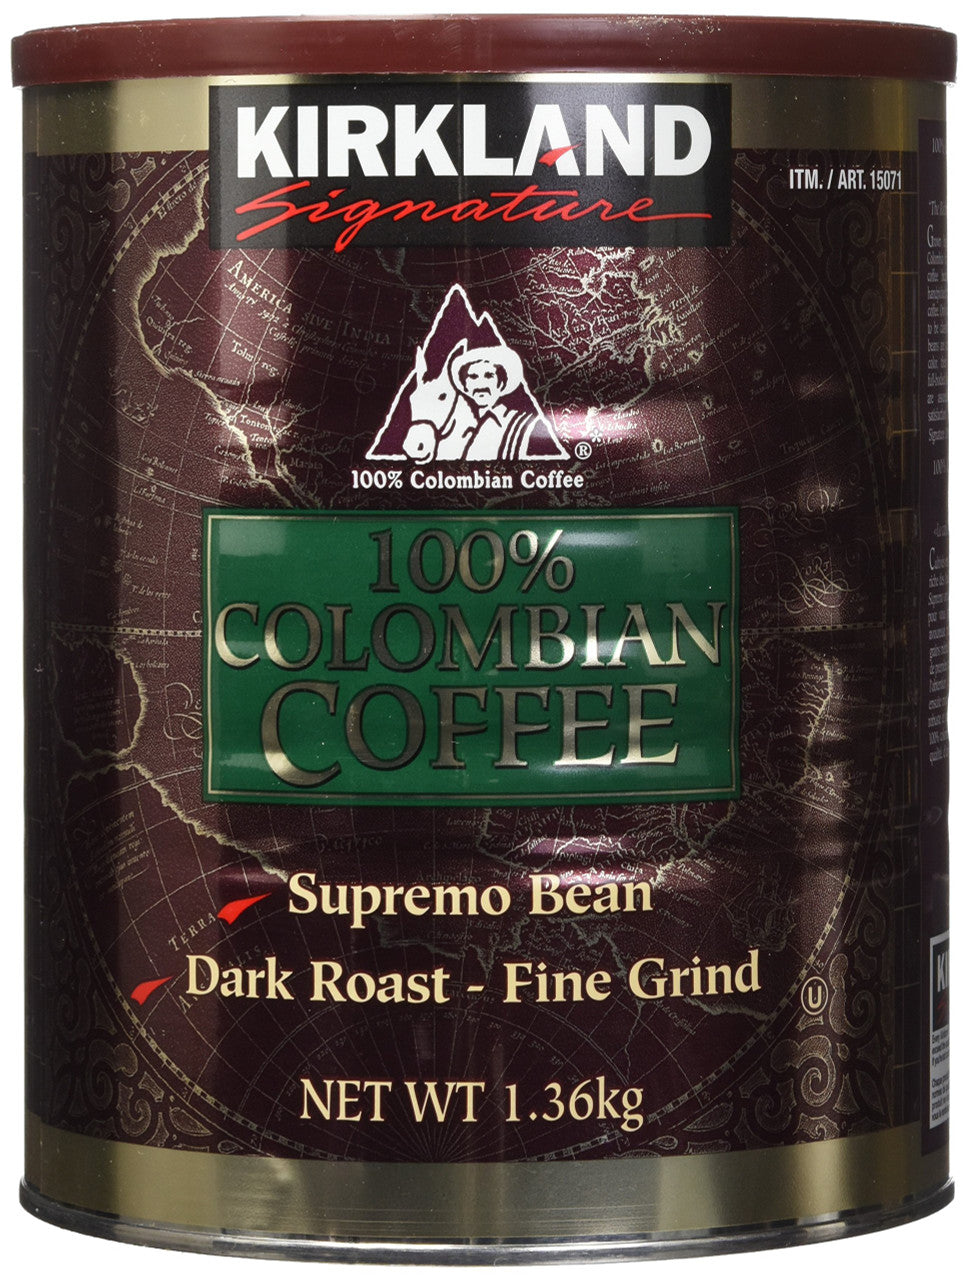 Kirkland Signature Supremo Bean Ground Coffee, 1.36kg/3lbs. {Canadian}